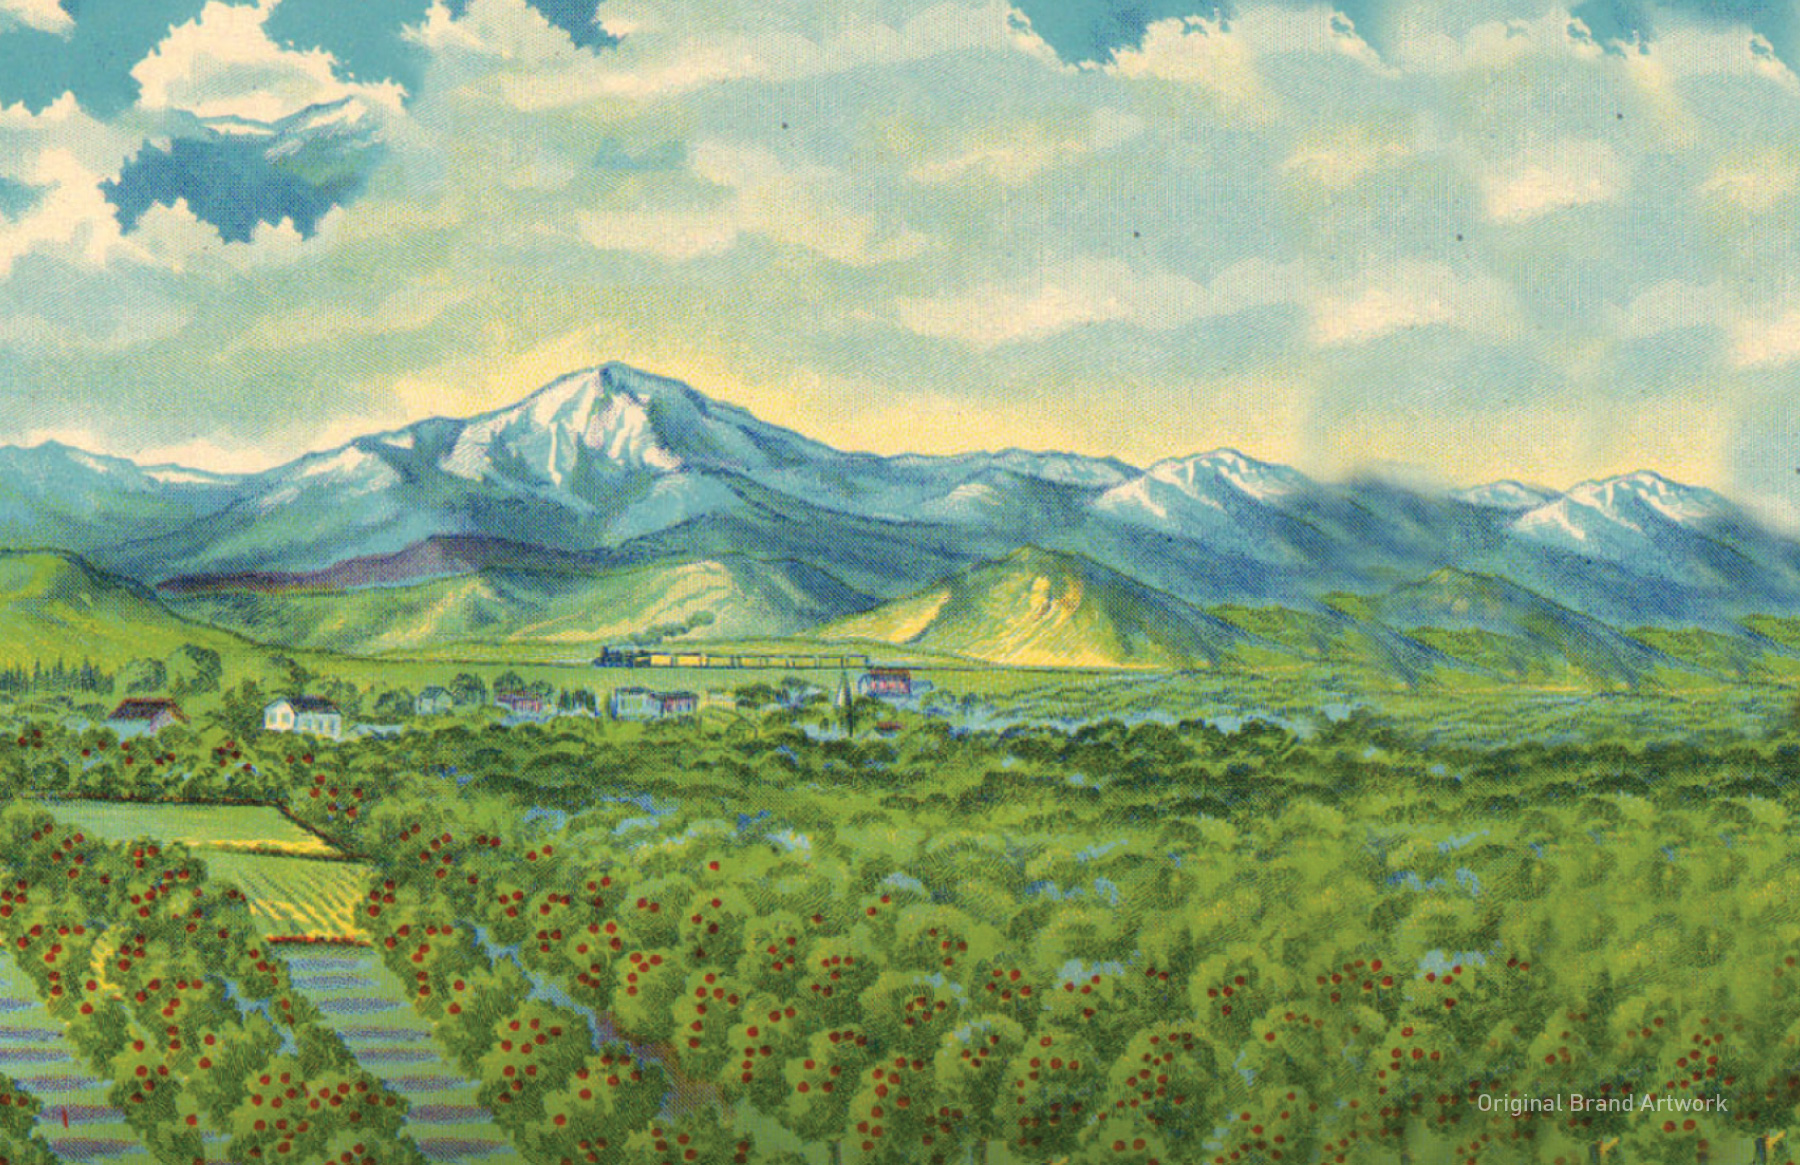 Beautiful orchard landscape painting